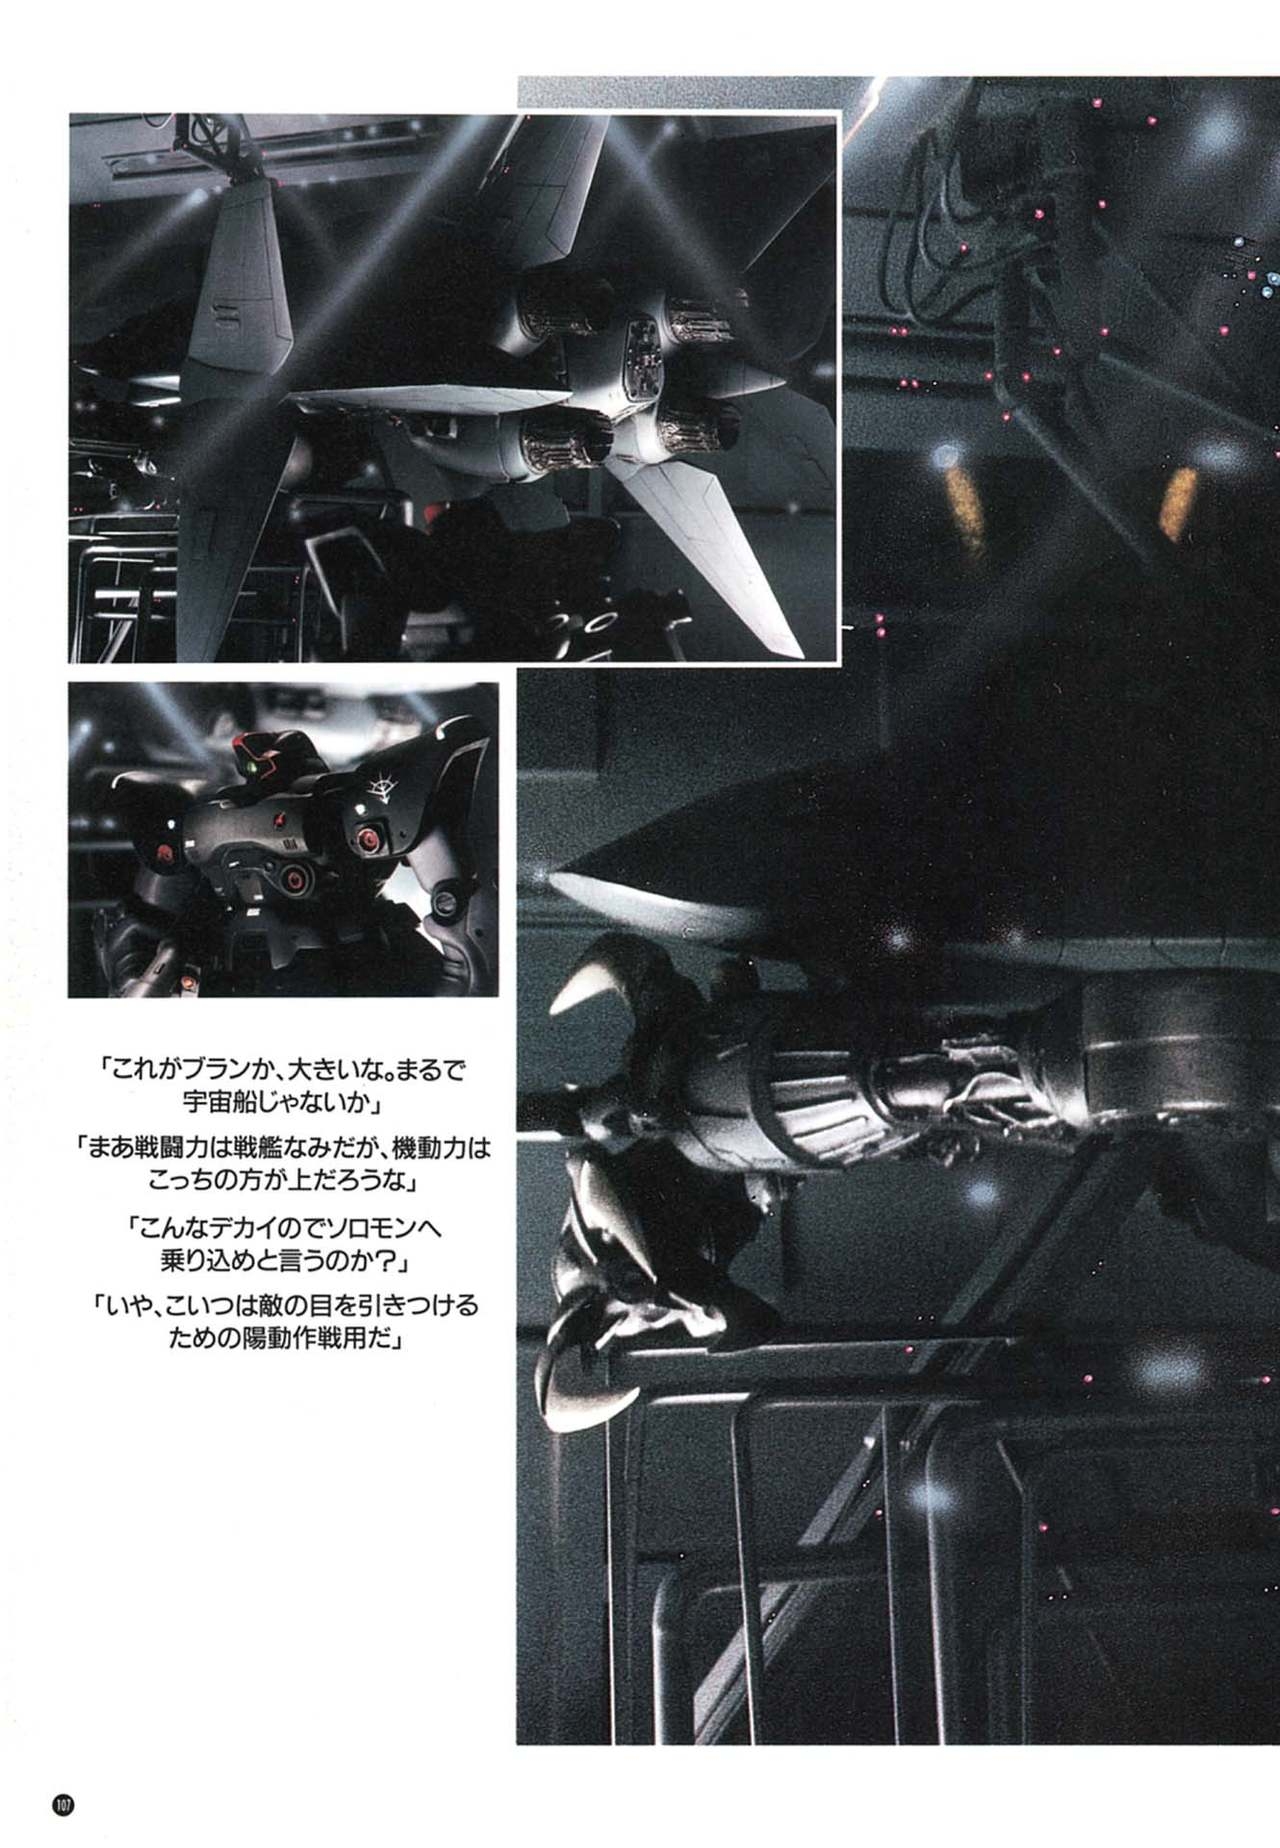 [Kazuhisa Kondo] Kazuhisa Kondo 2D & 3D Works - Go Ahead - From Mobile Suit Gundam to Original Mechanism 106